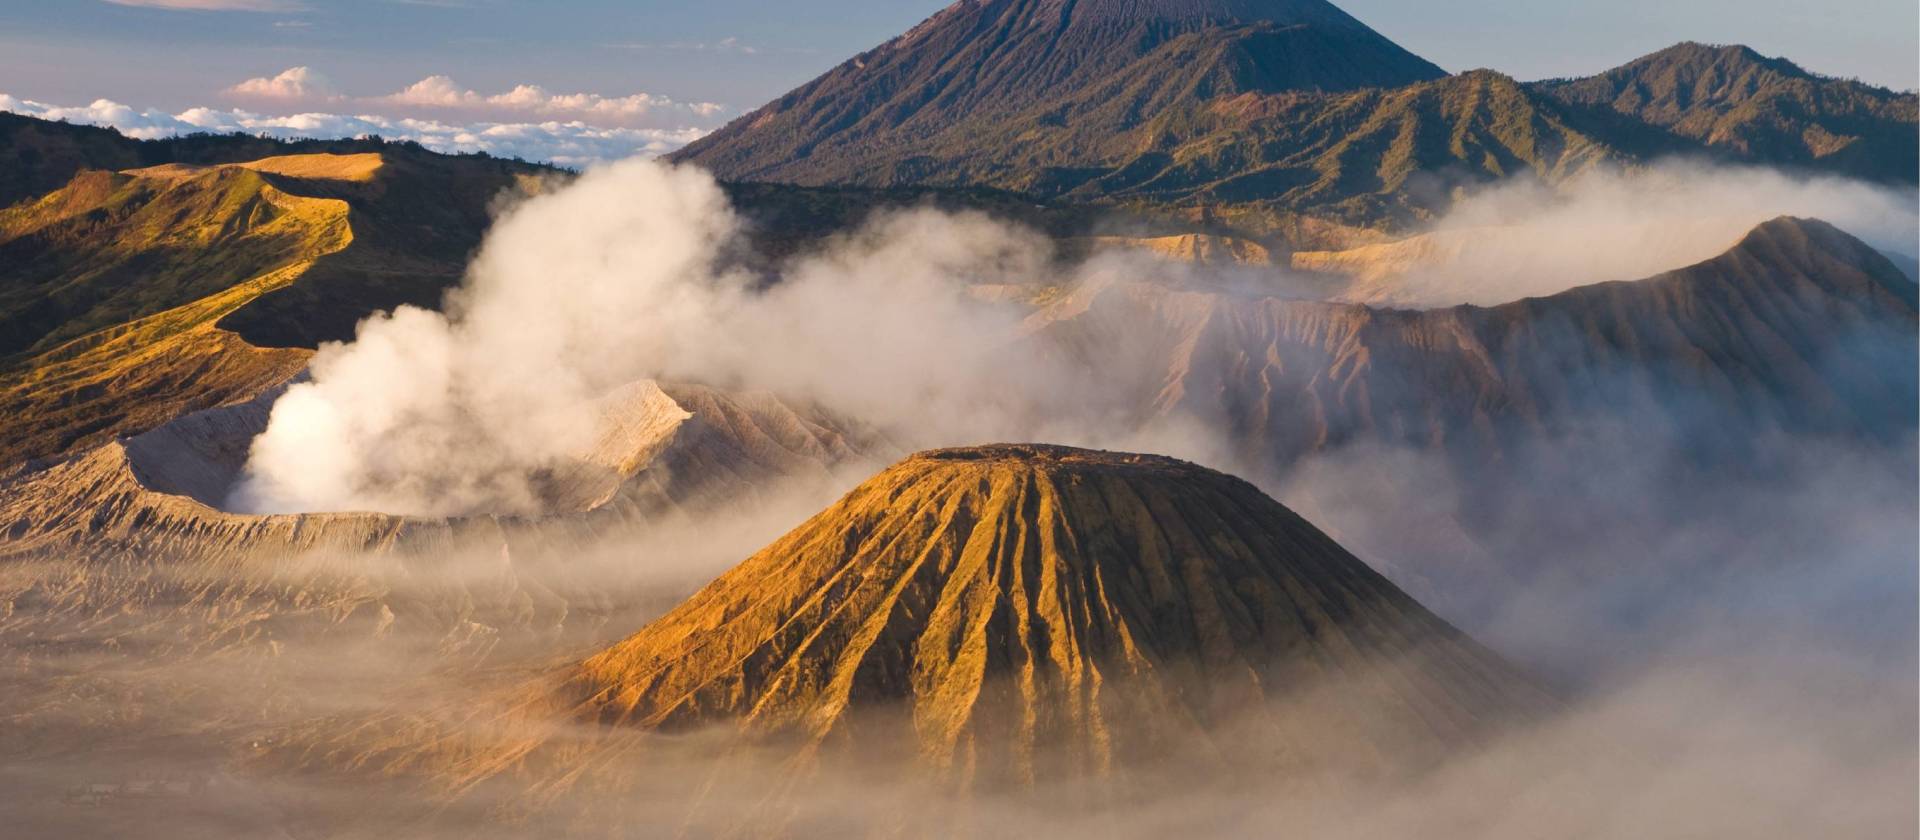 Вулкан Бромо в Индонезии жерло